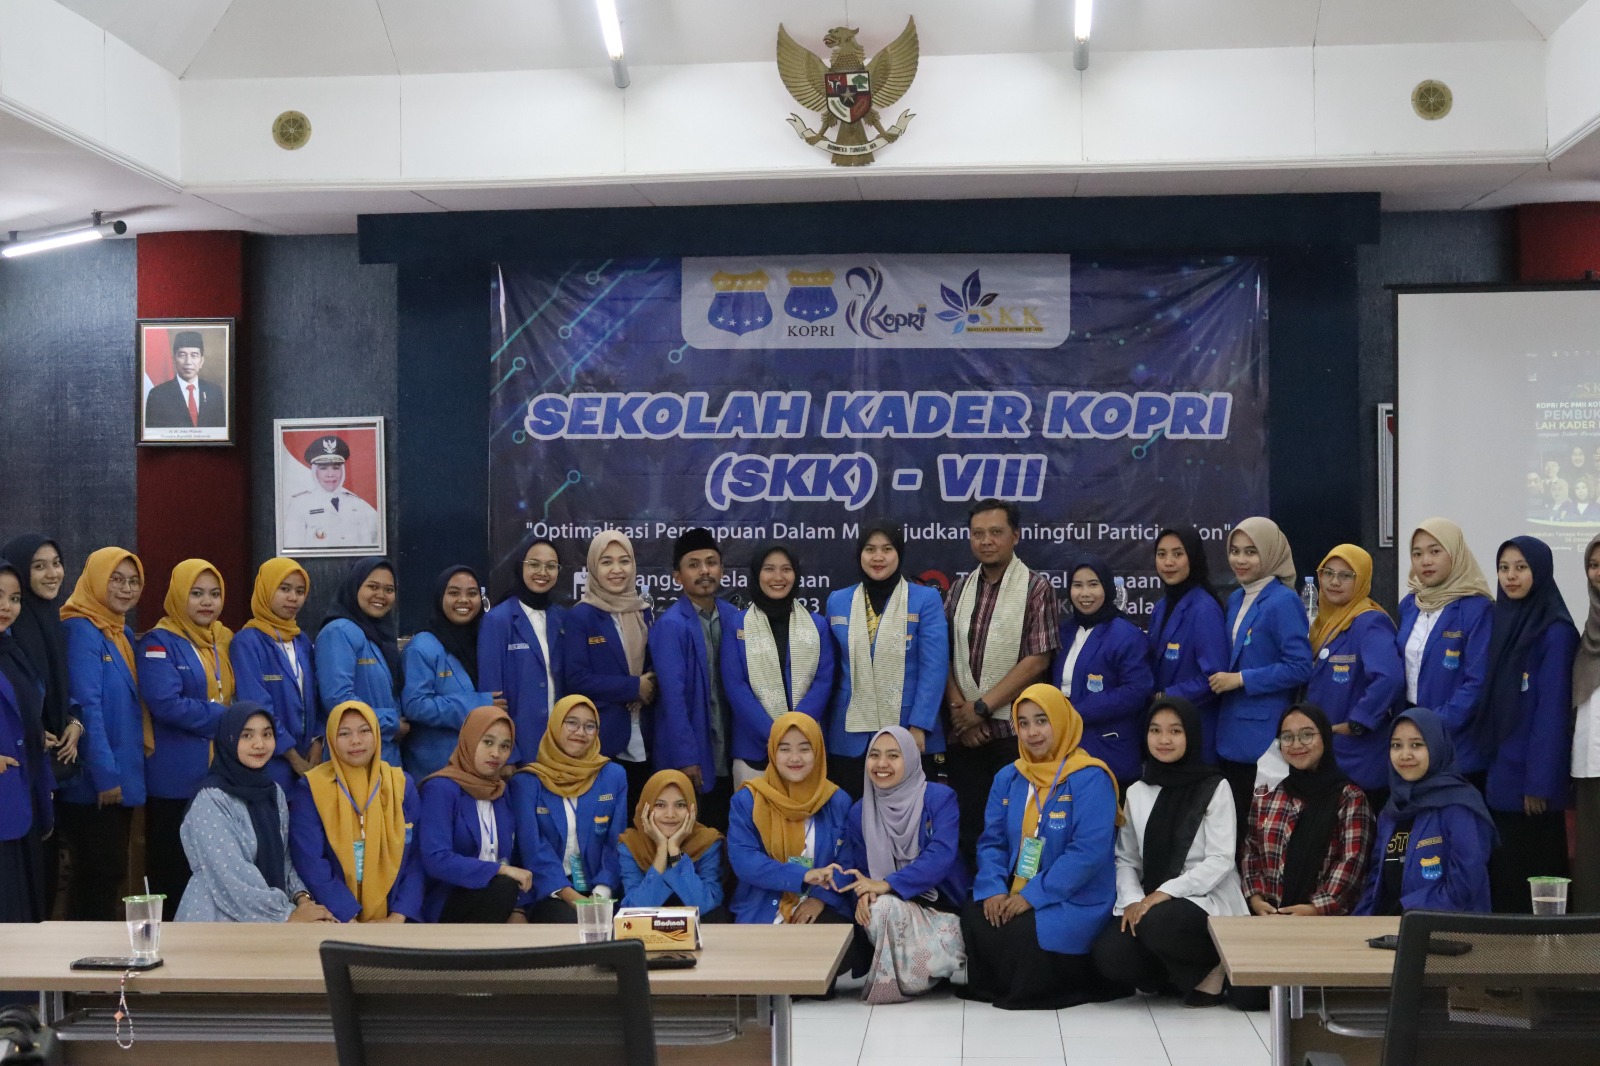 Optimalisasi Perempuan dalam Mewujudkan Meaningful Participation: KOPRI PC PMII Kota Malang Menggelar Sekolah Kader Kopri (SKK)